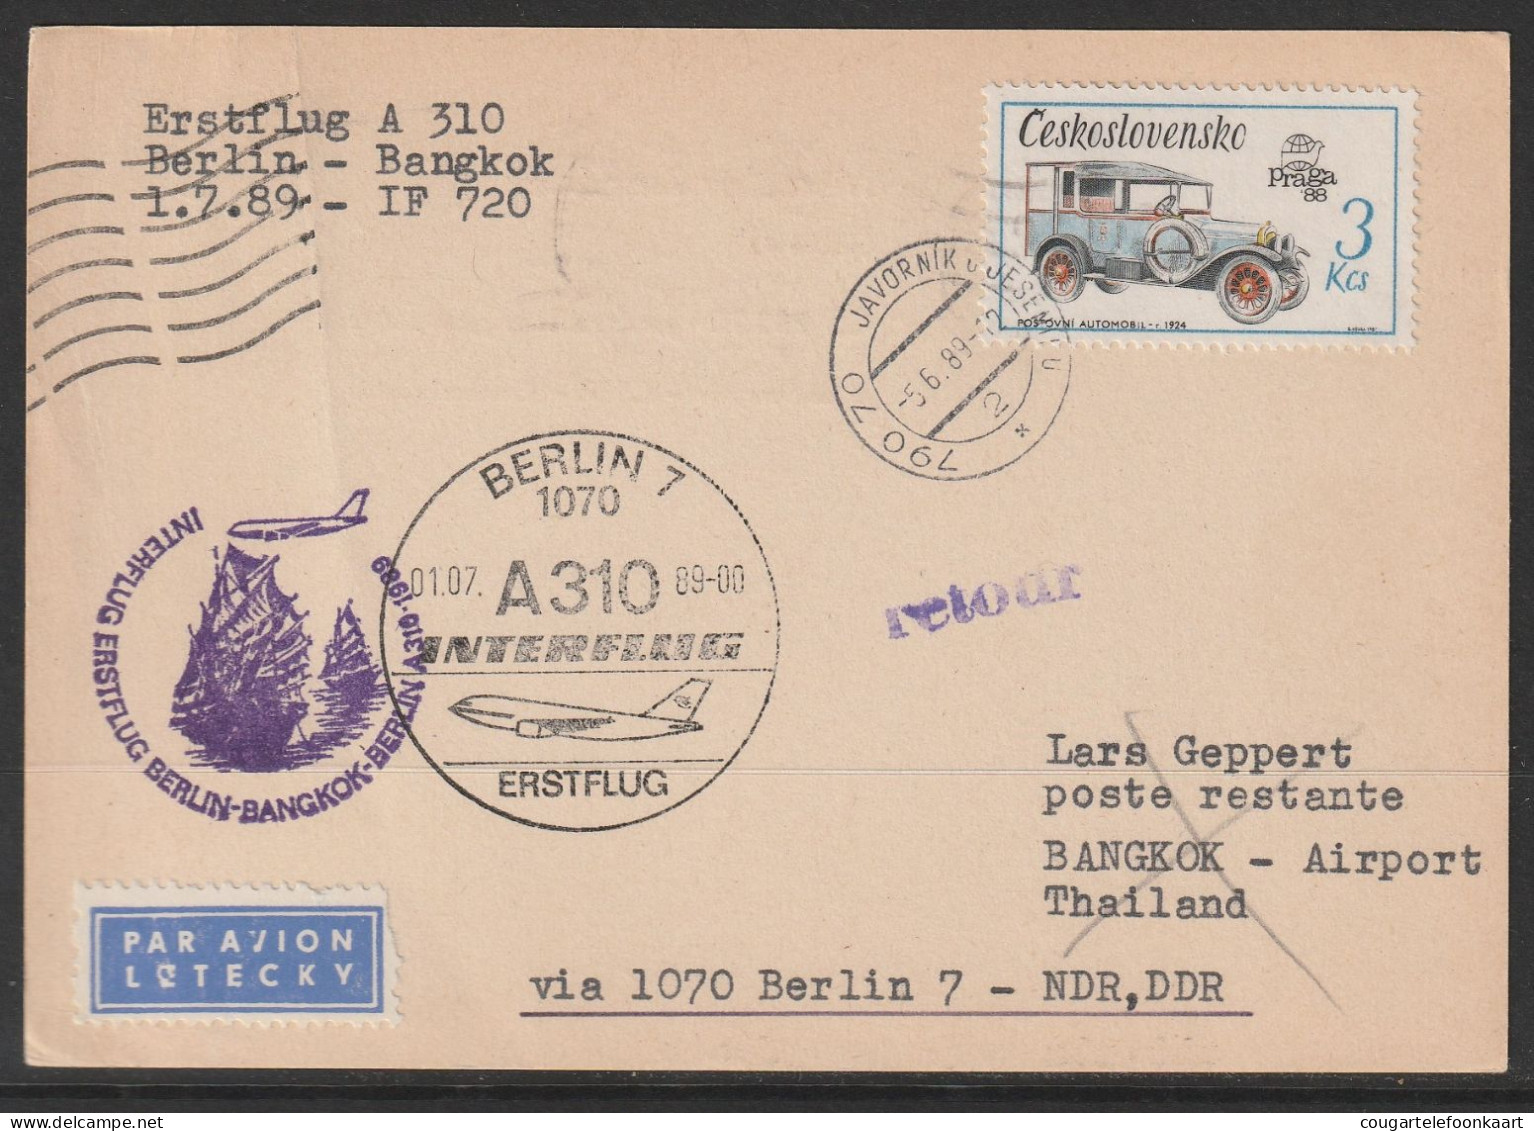 1989, Interflug, First Flight Card, Javornik-Bangkok, Feeder Mail - Airmail